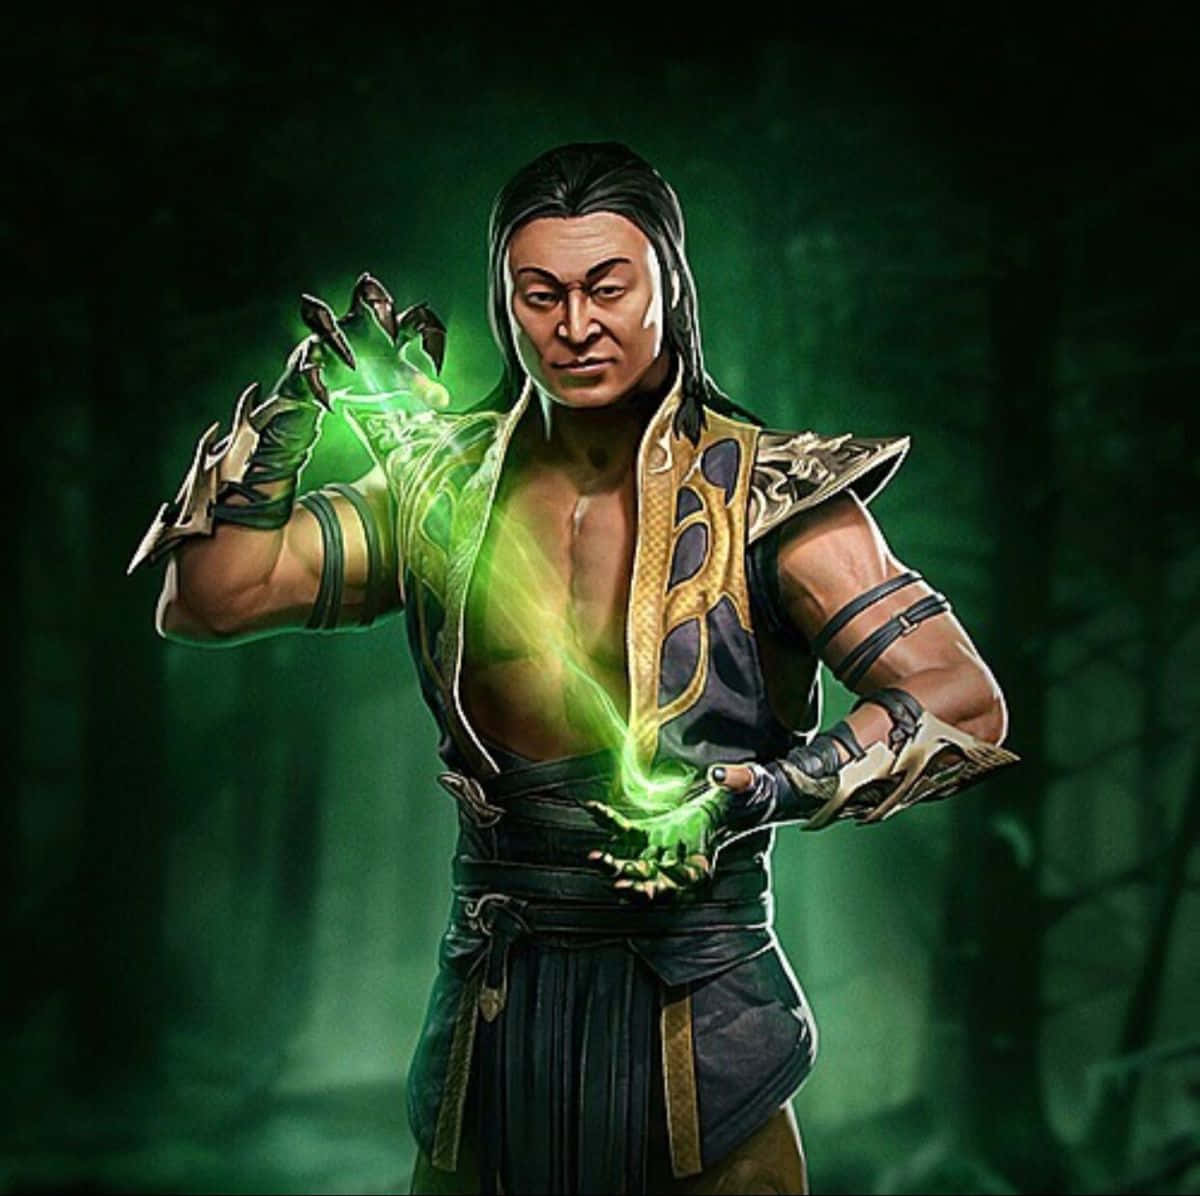 Shang Tsung Mortal Kombat 1 4K Wallpaper iPhone HD Phone #6551k